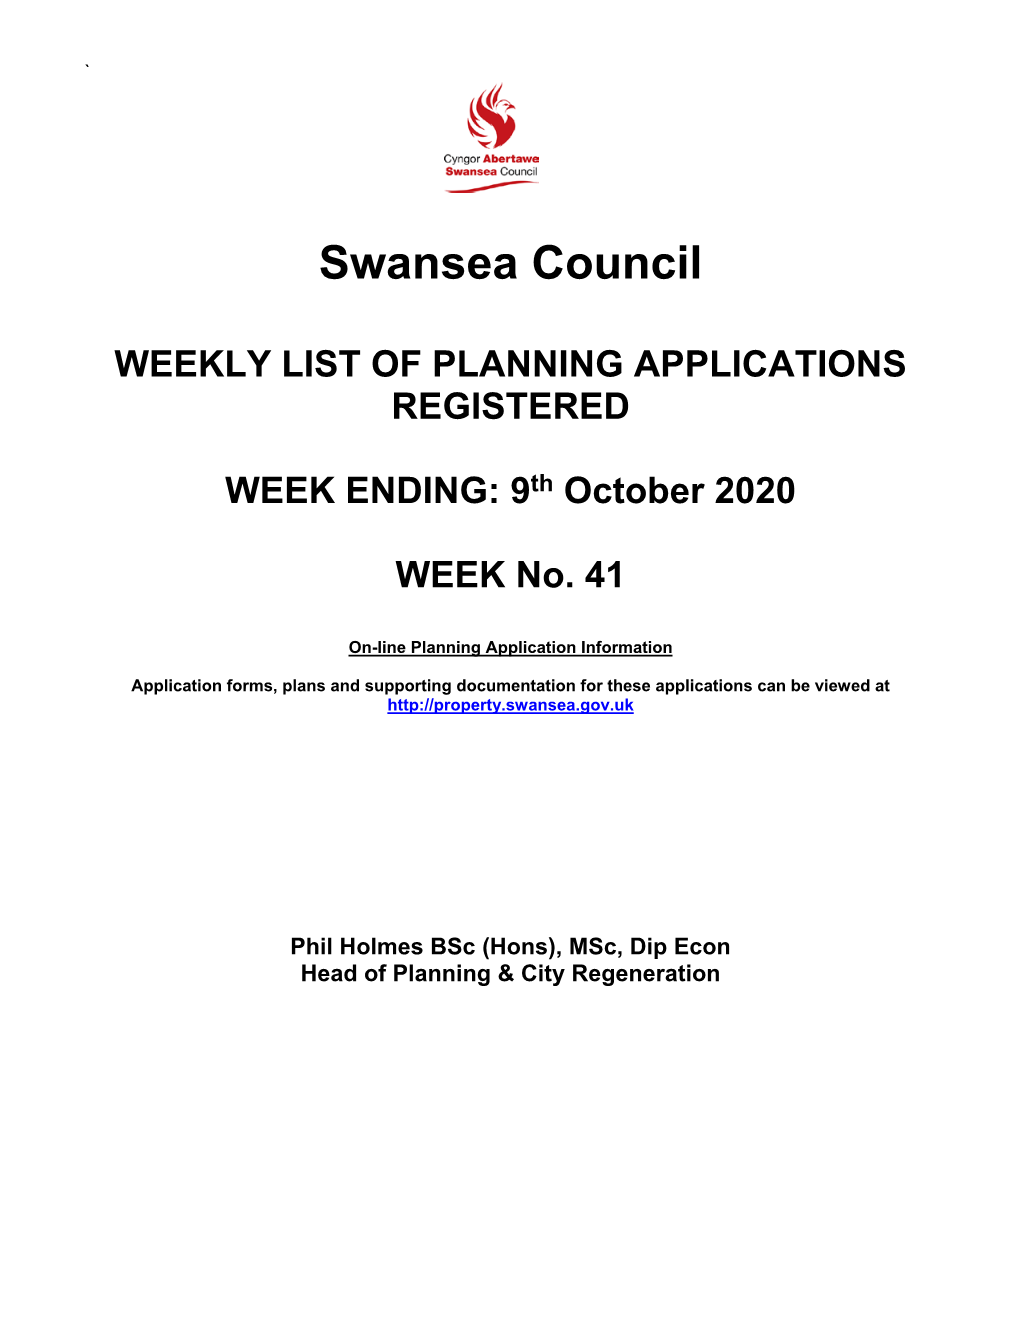 Applications for Week Ending 9 October 2020